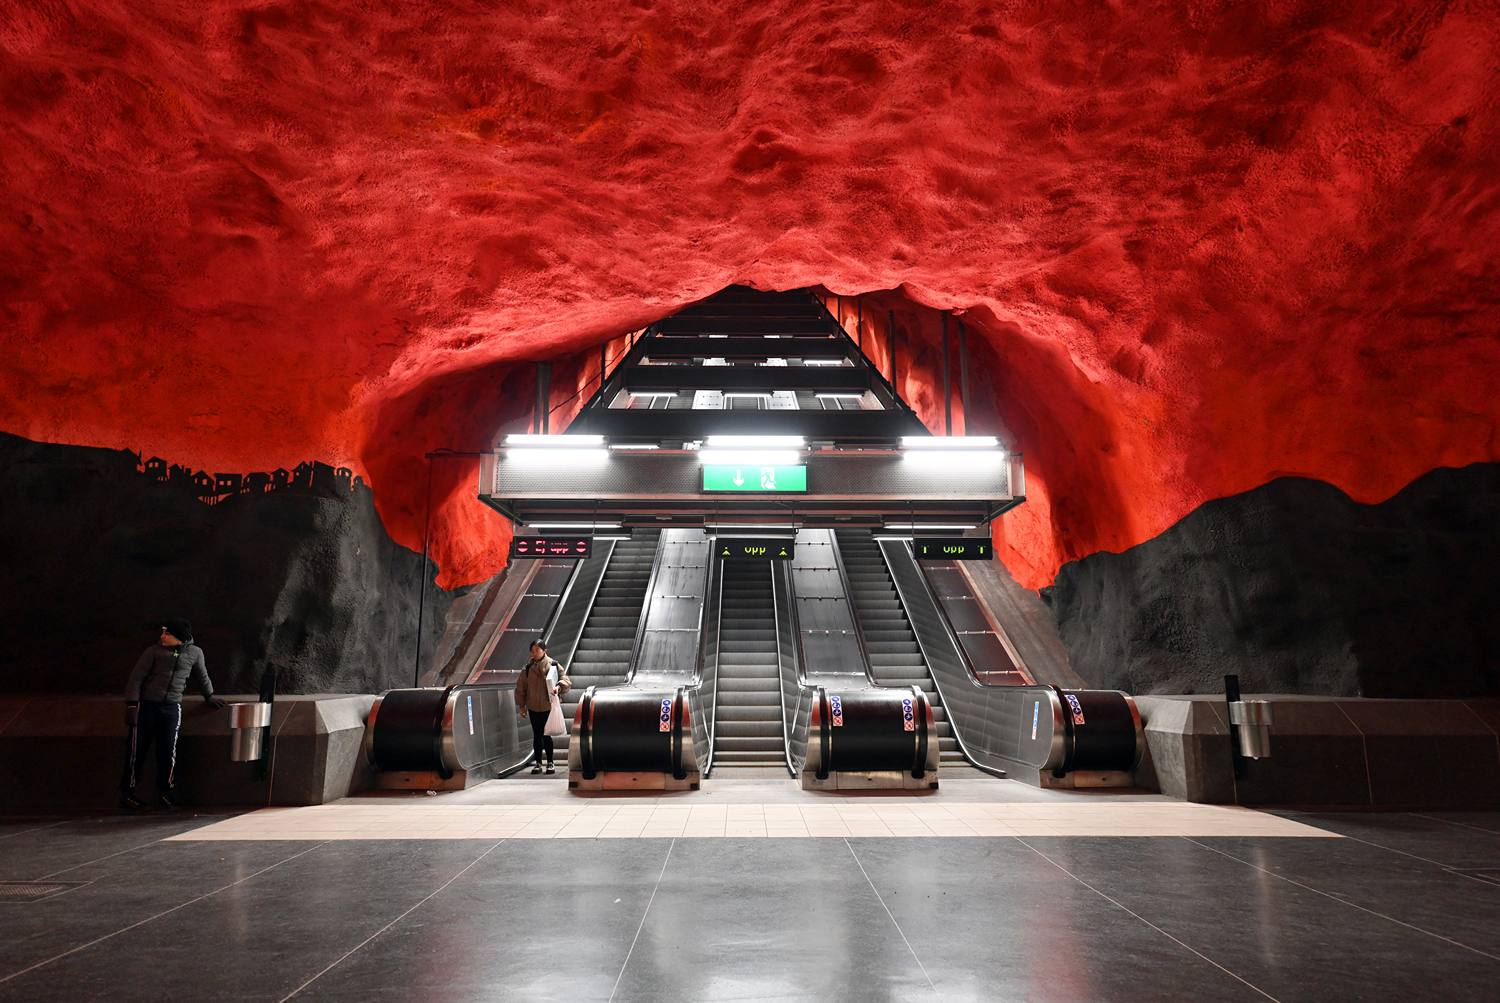 Stockholm Metro: The Underground Art Gallery